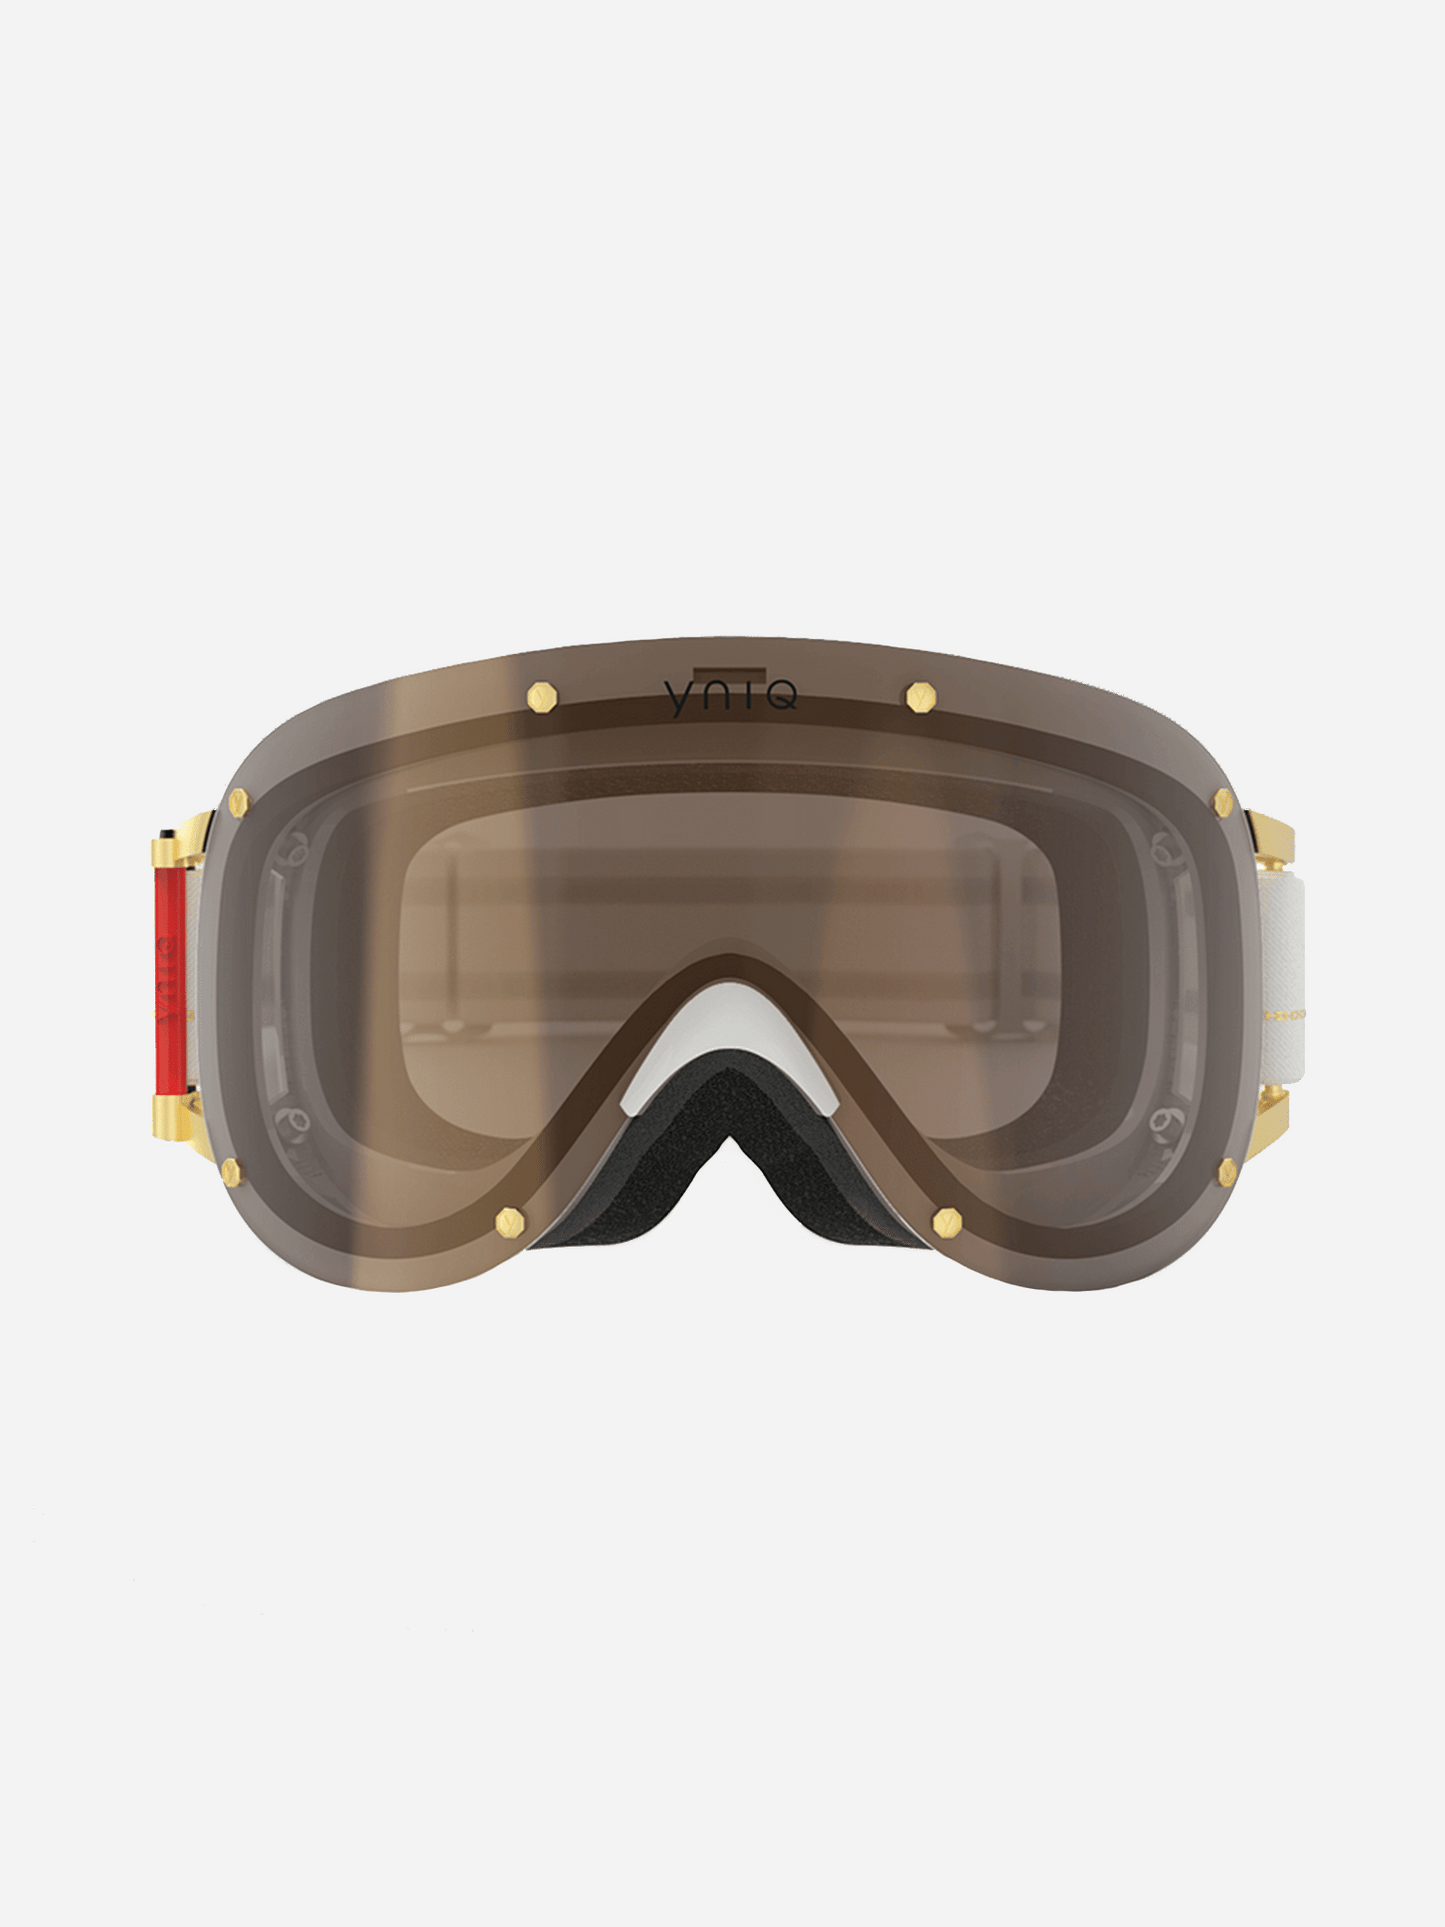 YNIQ Model Four White Gold Goggle